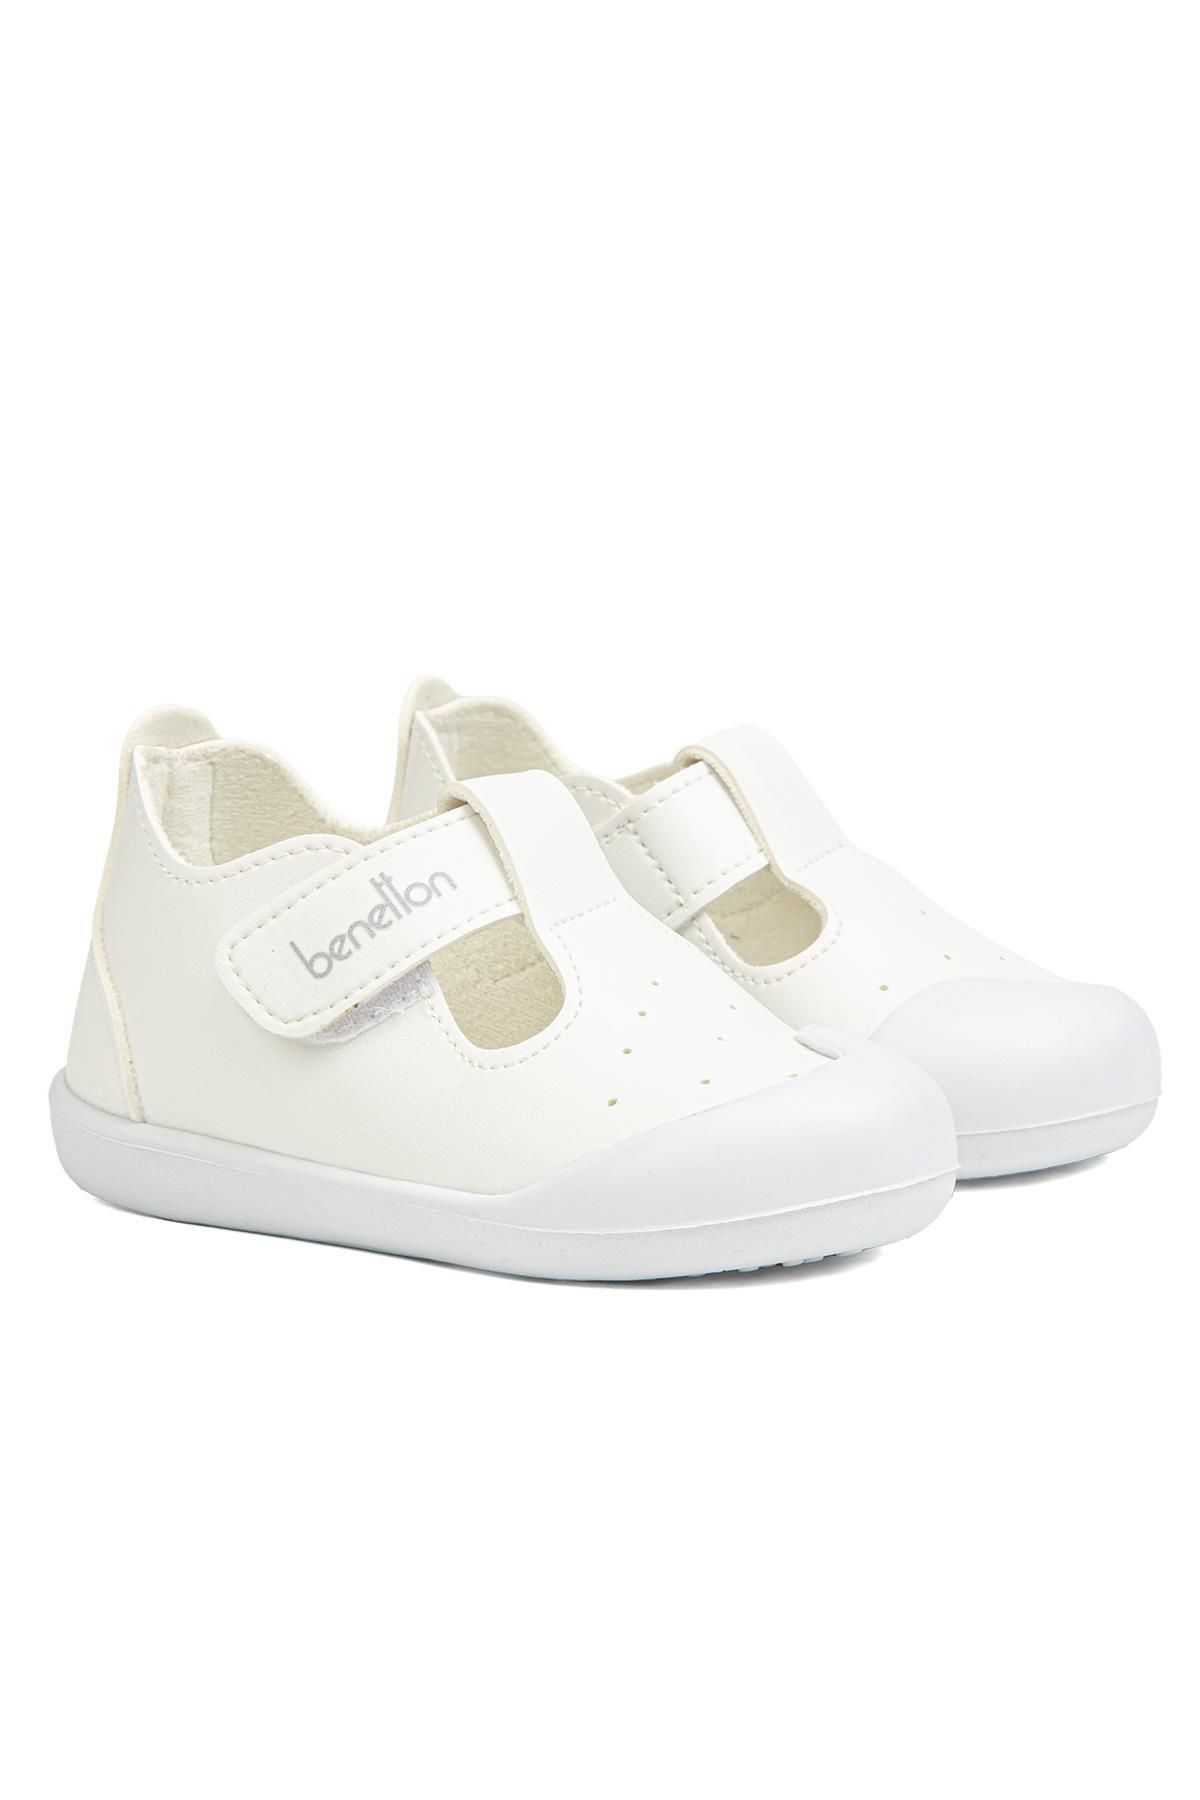 Benetton ® | BN-1250- سفید - کفش ورزشی بچه گانه